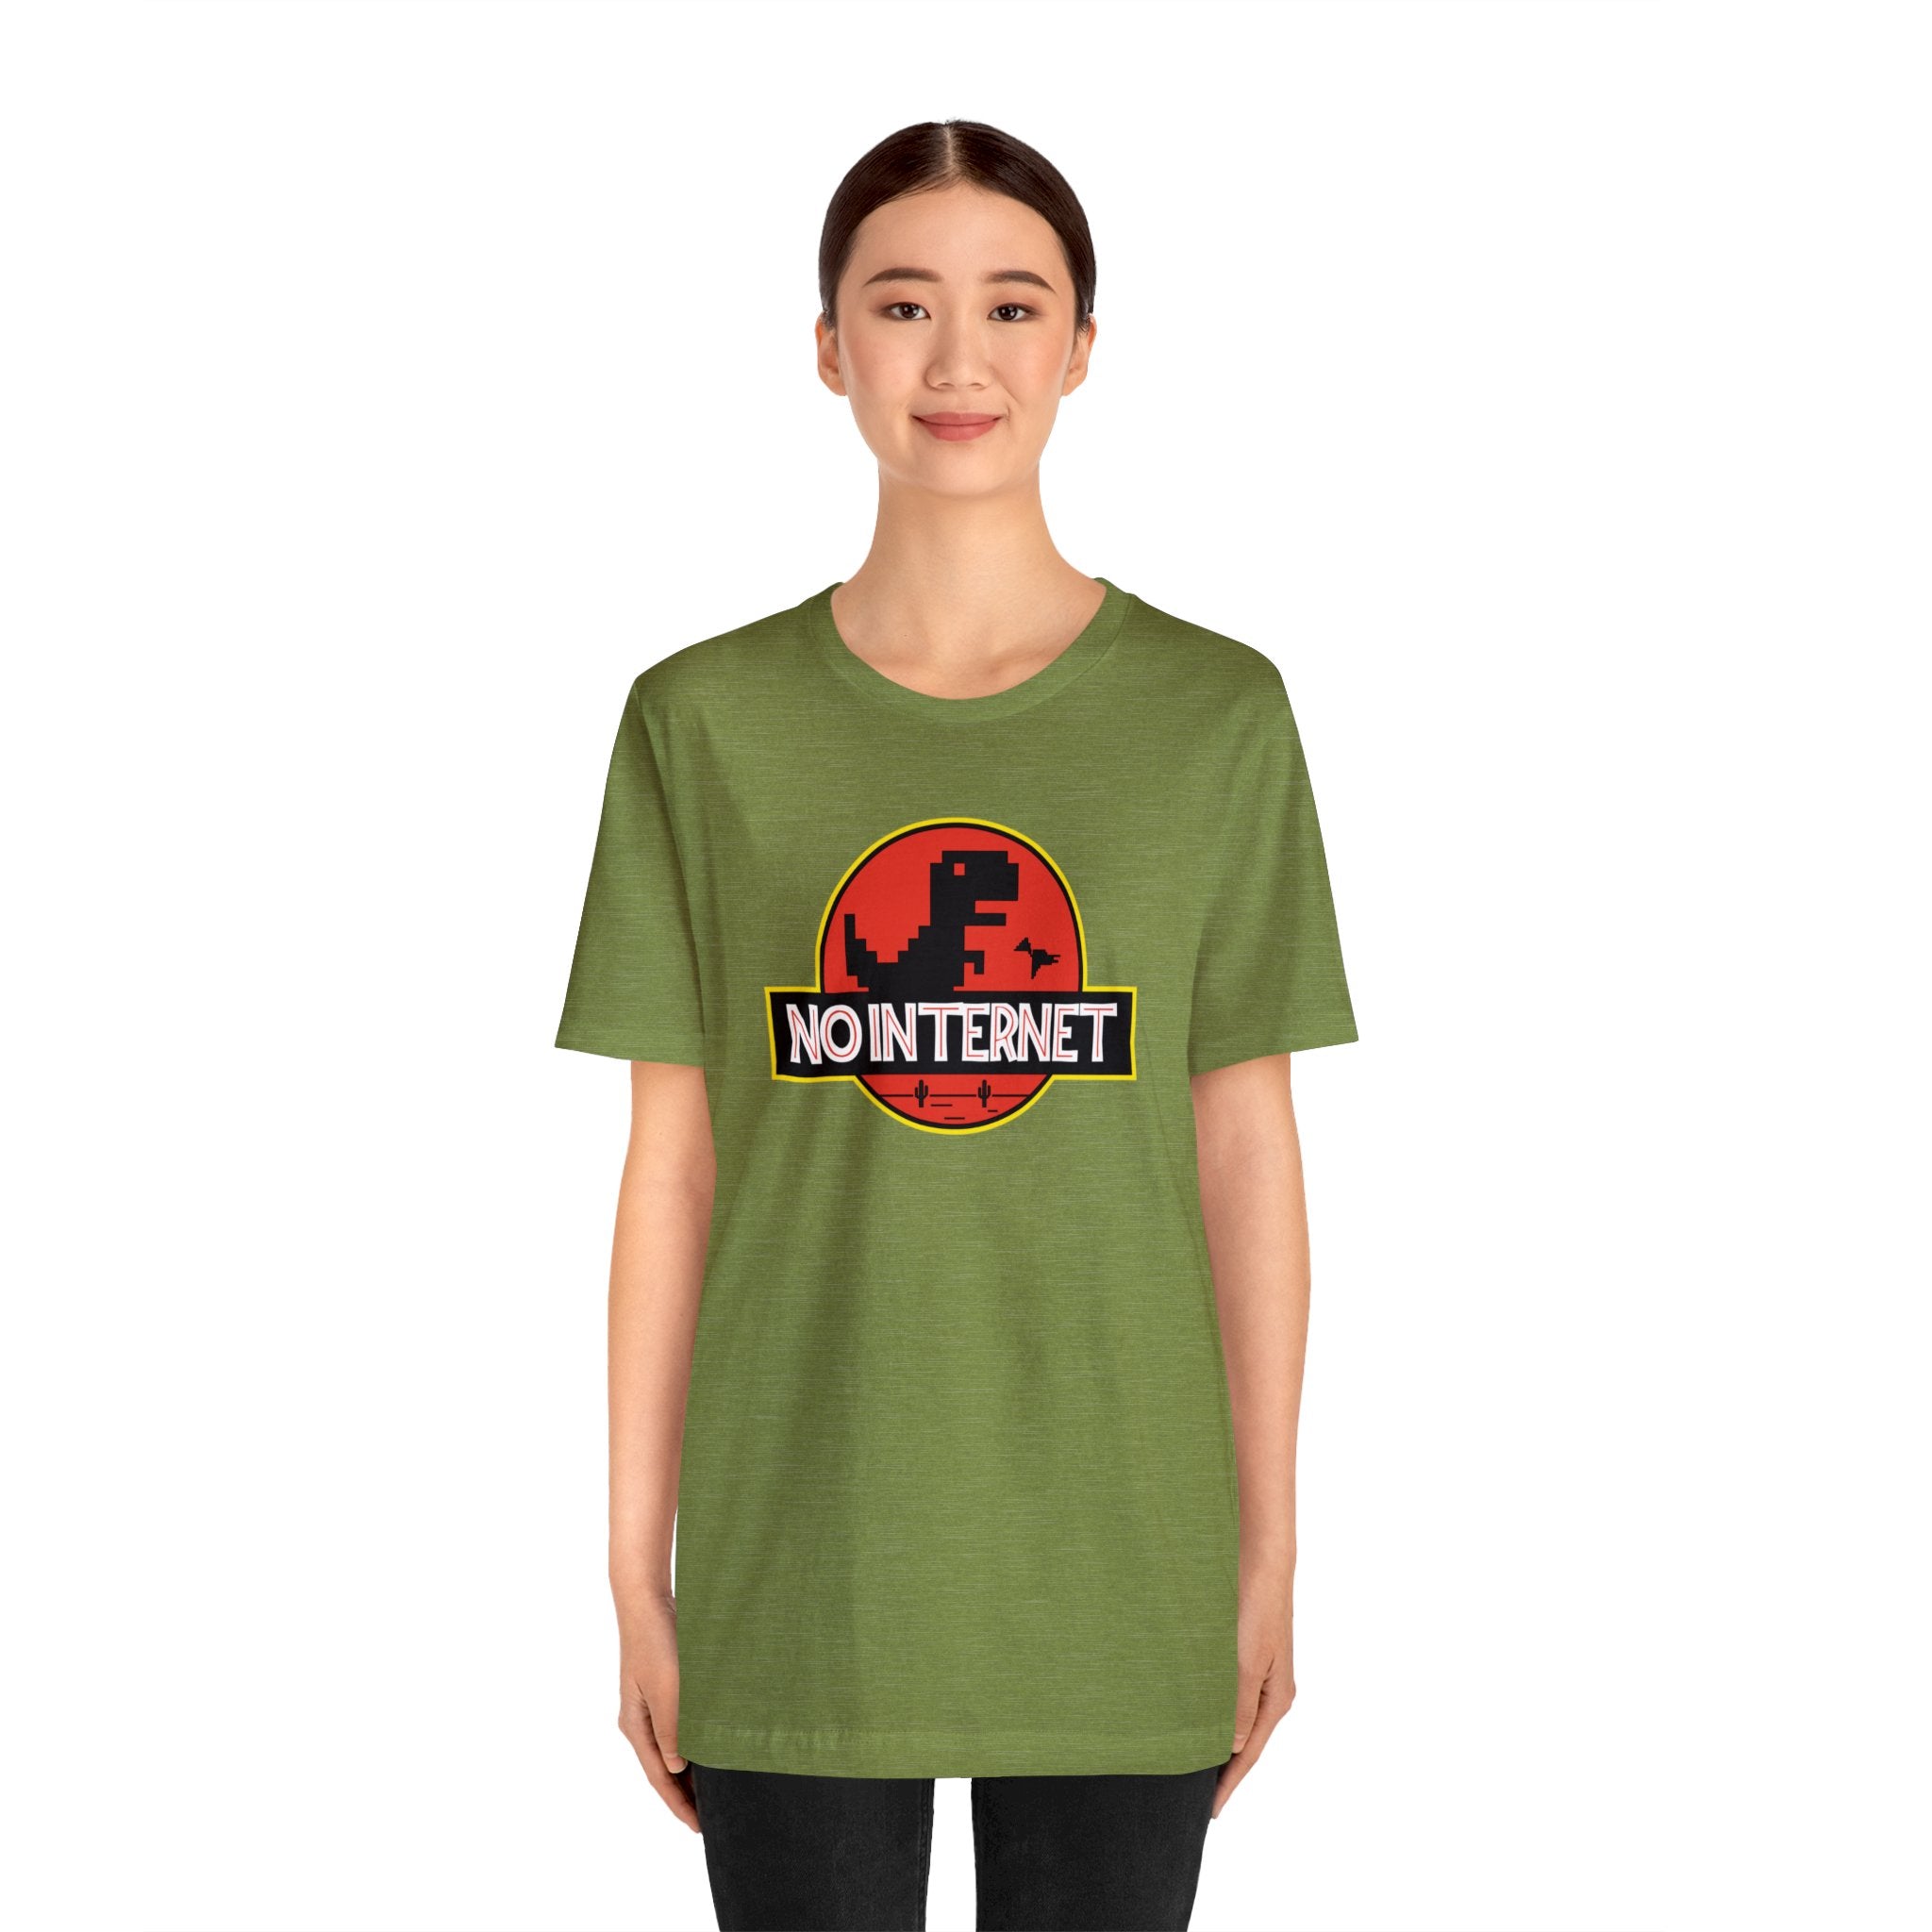 A woman wearing a No Internet T-Shirt.